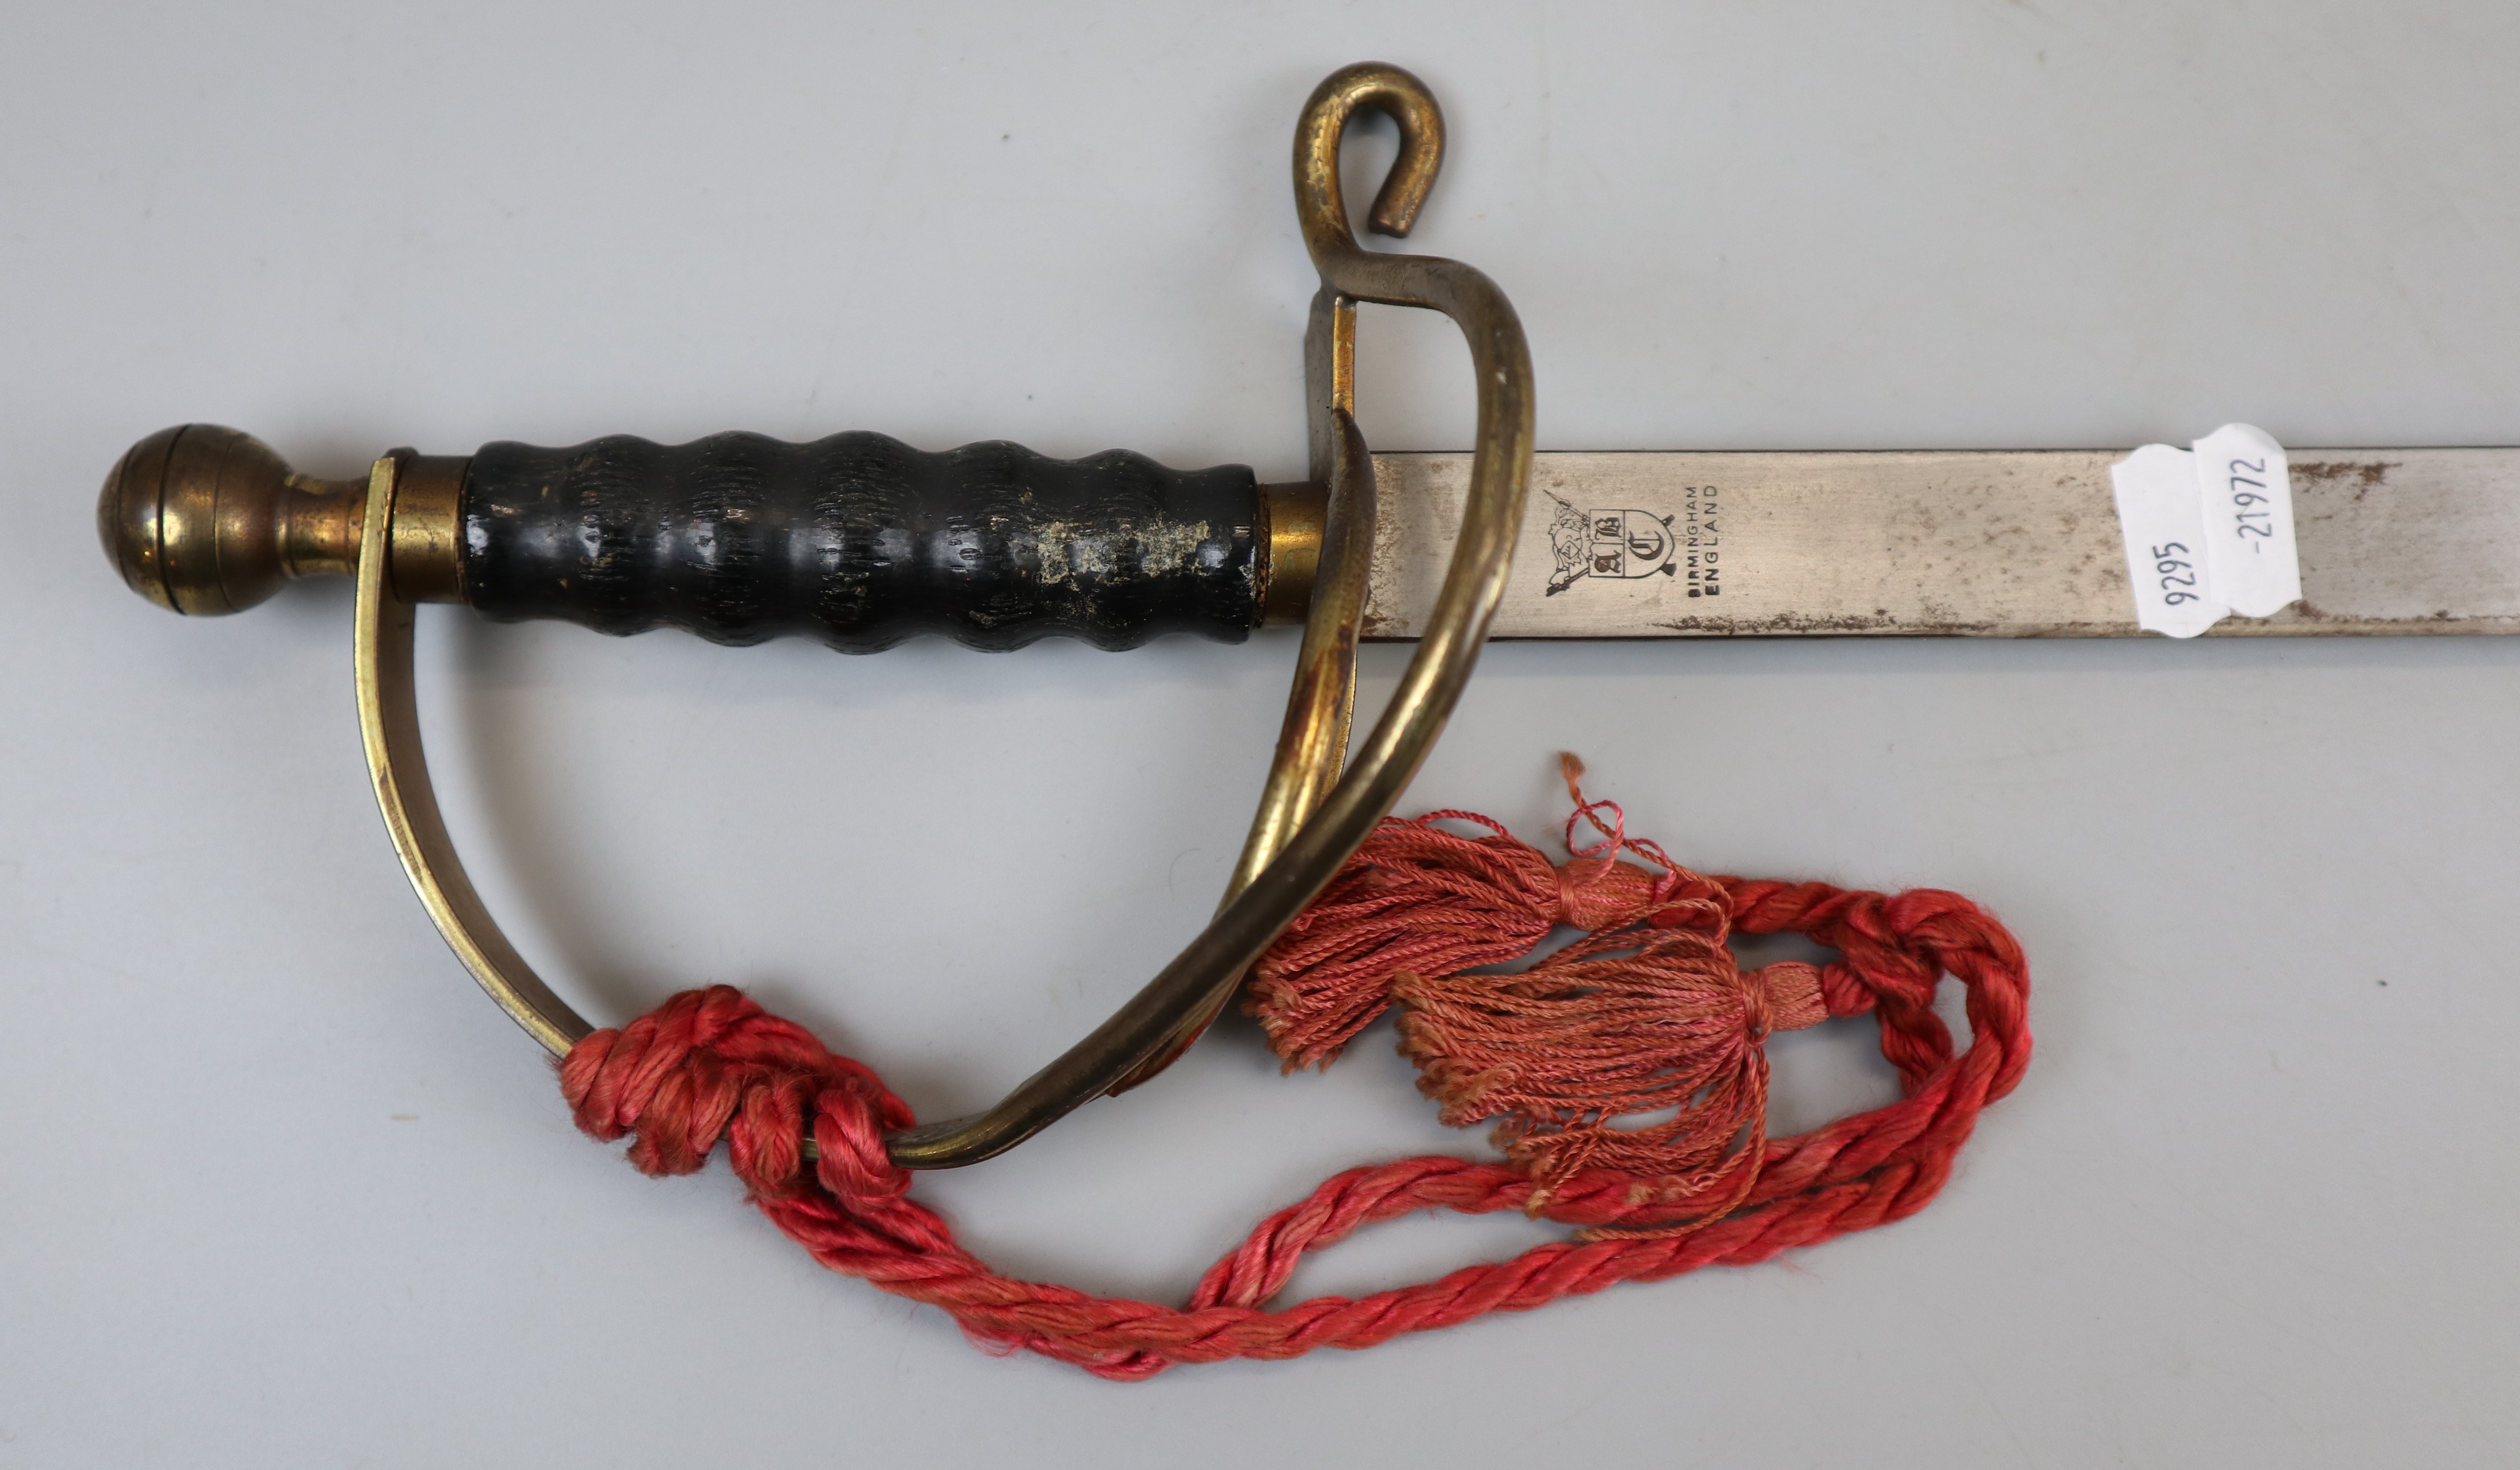 2 swords - ABC Birmingham and Solingen Germany - Image 3 of 5